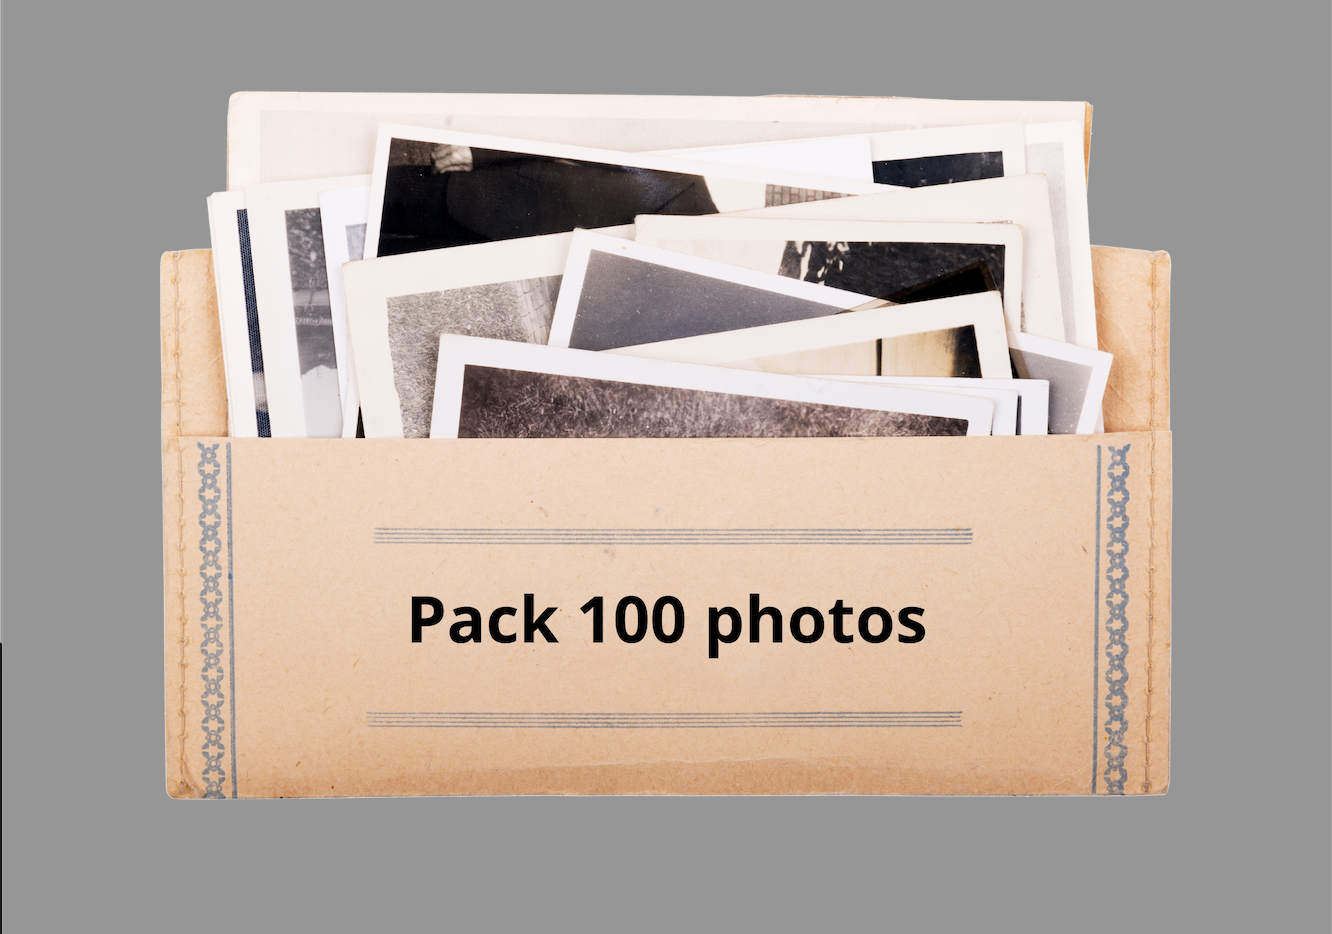 Pack 100 photos